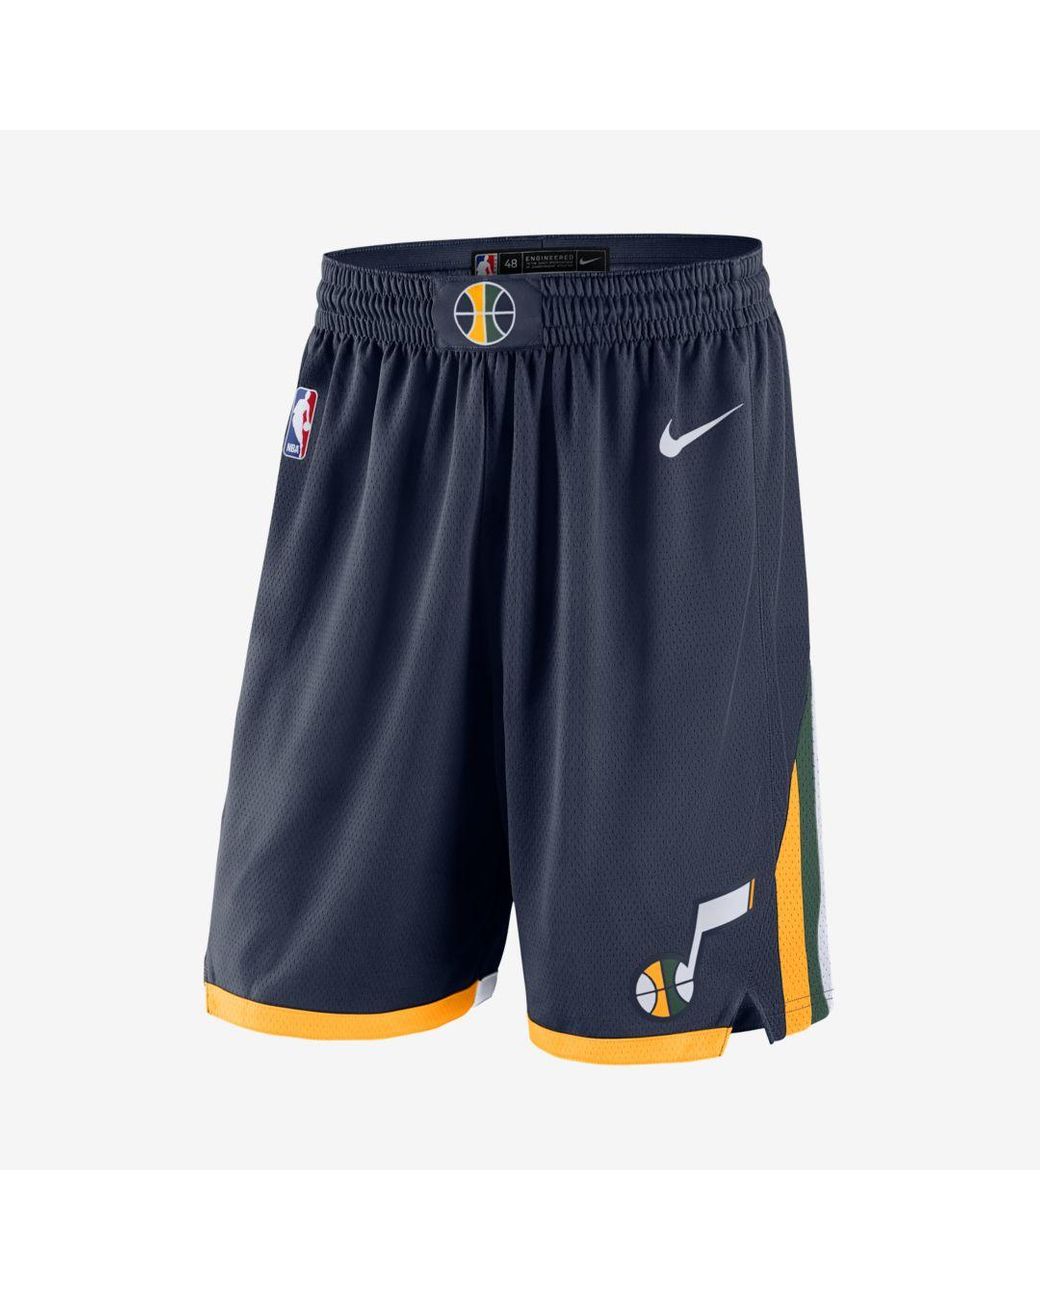 Nike Utah Jazz Icon Edition Swingman Nba Shorts in Blue for Men - Lyst